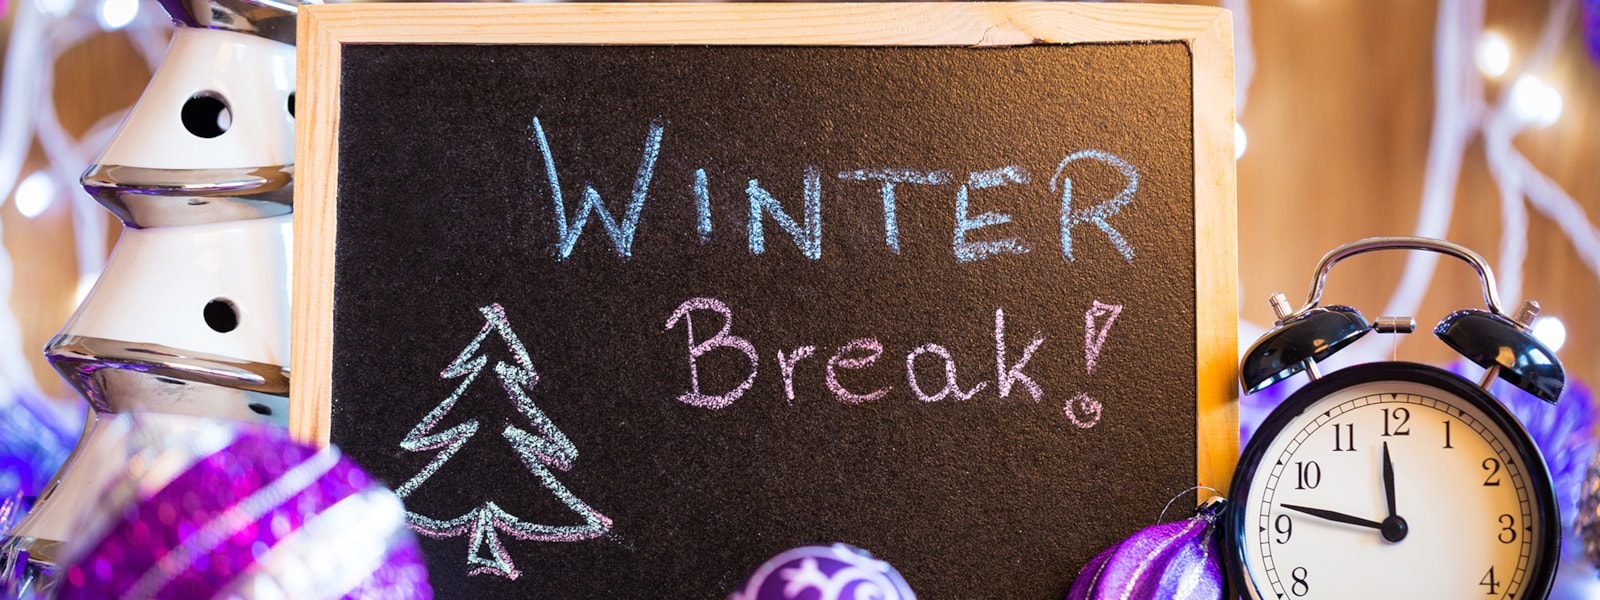 Winter Break written on a chalkboard with a clock and ornaments